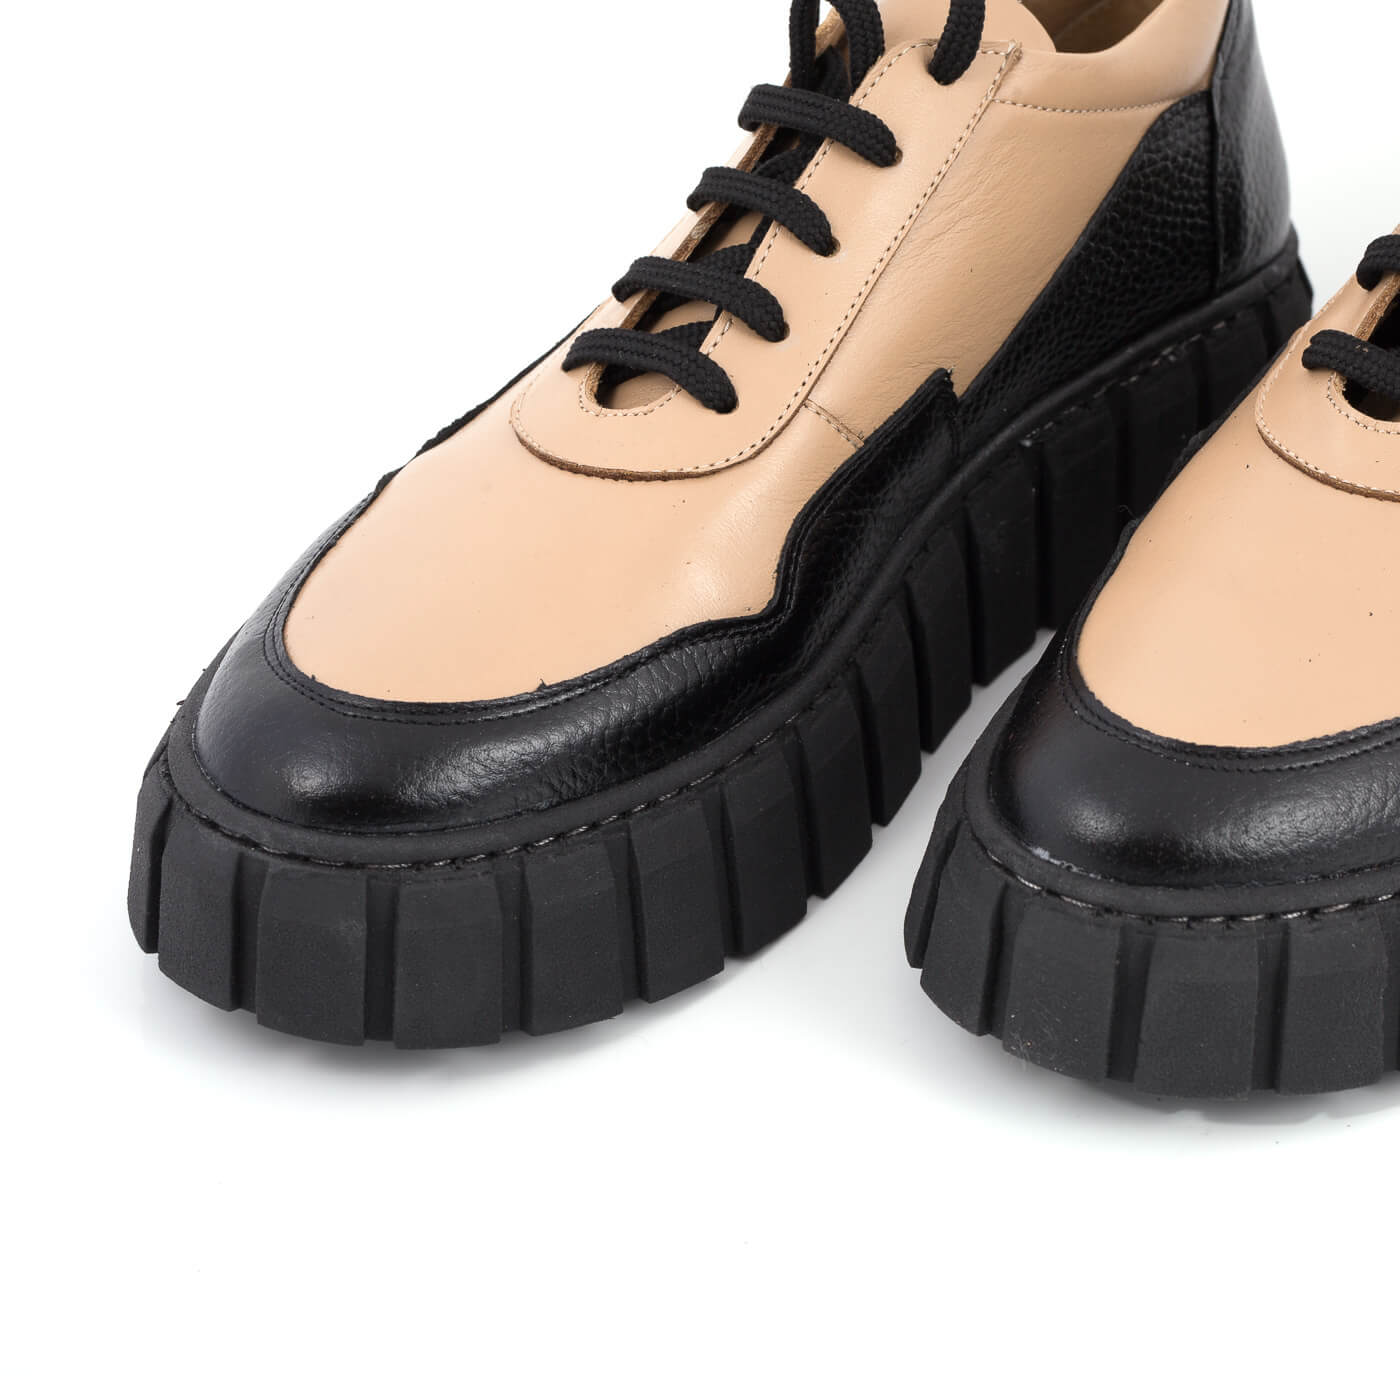 Pantofi Dama Brand Romanesc